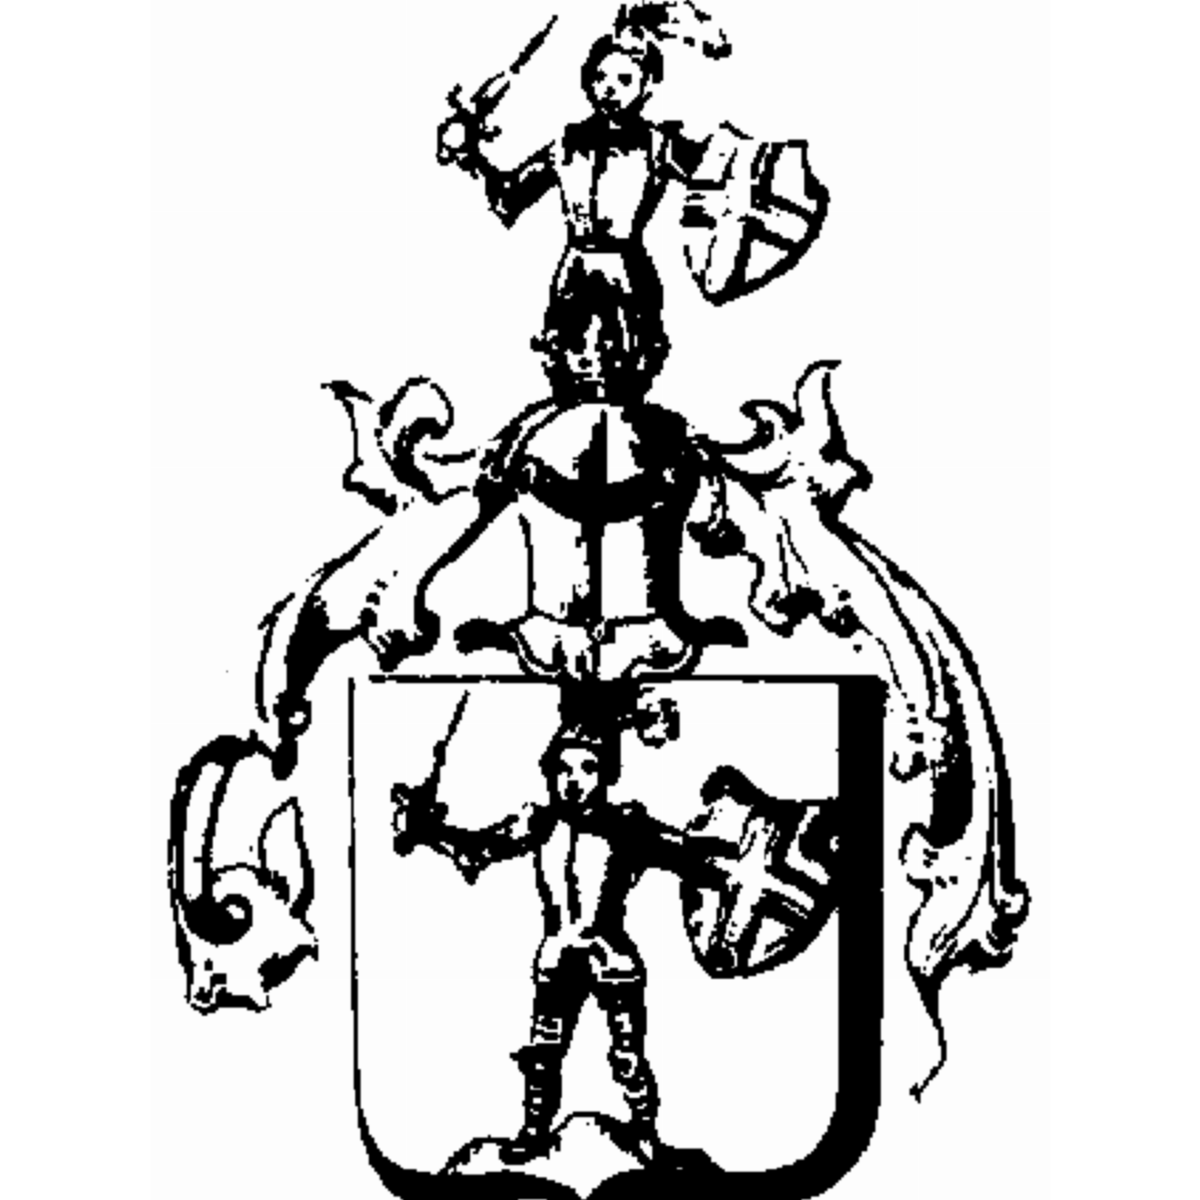 Wappen der Familie Bras